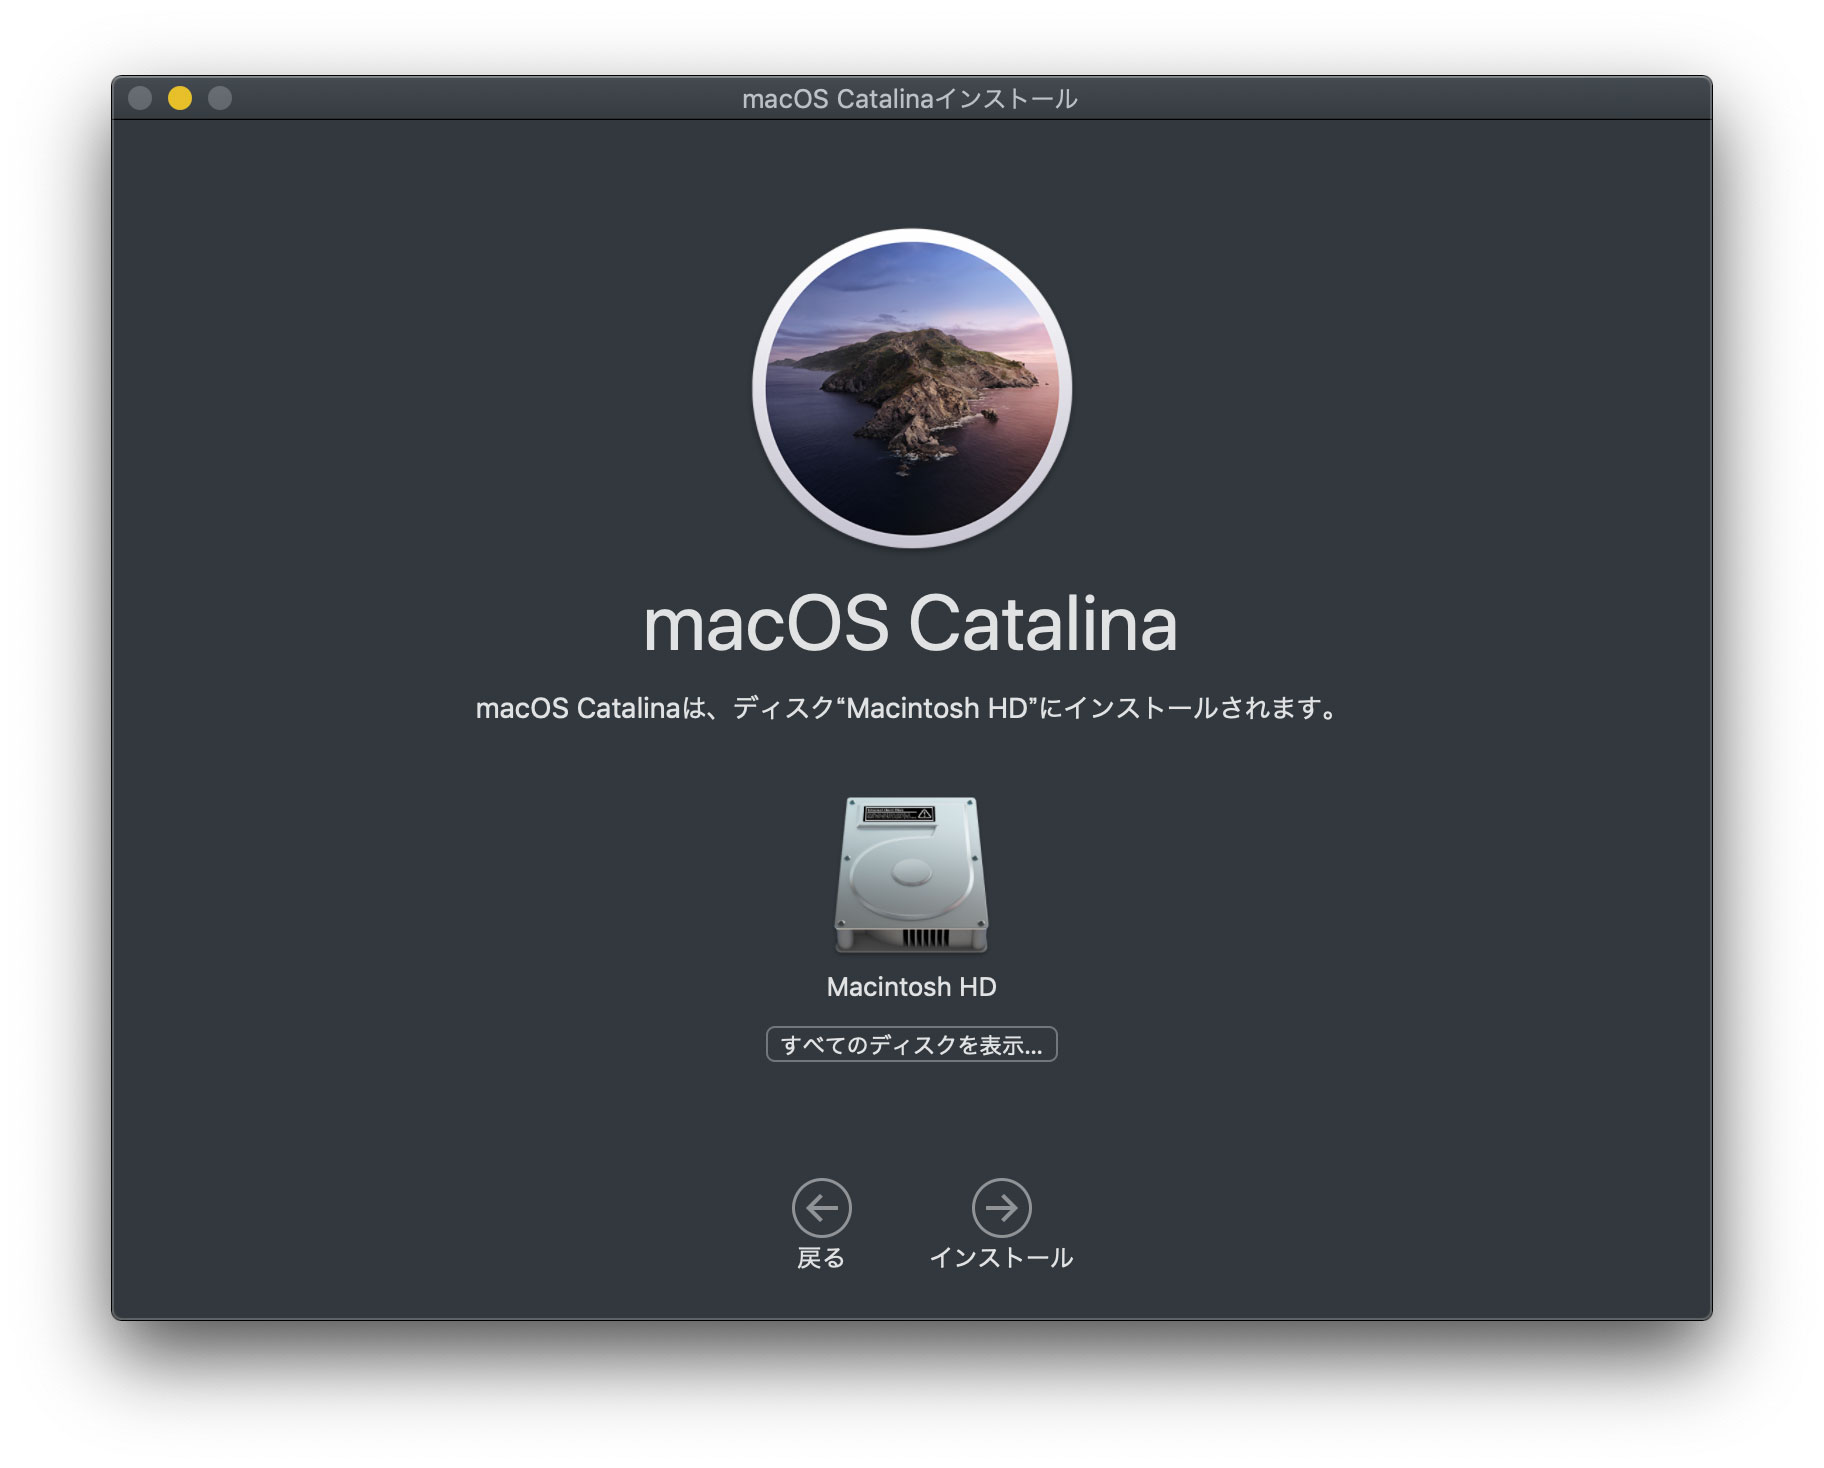 macOS Catalina 10.15.4にアップデートしました！